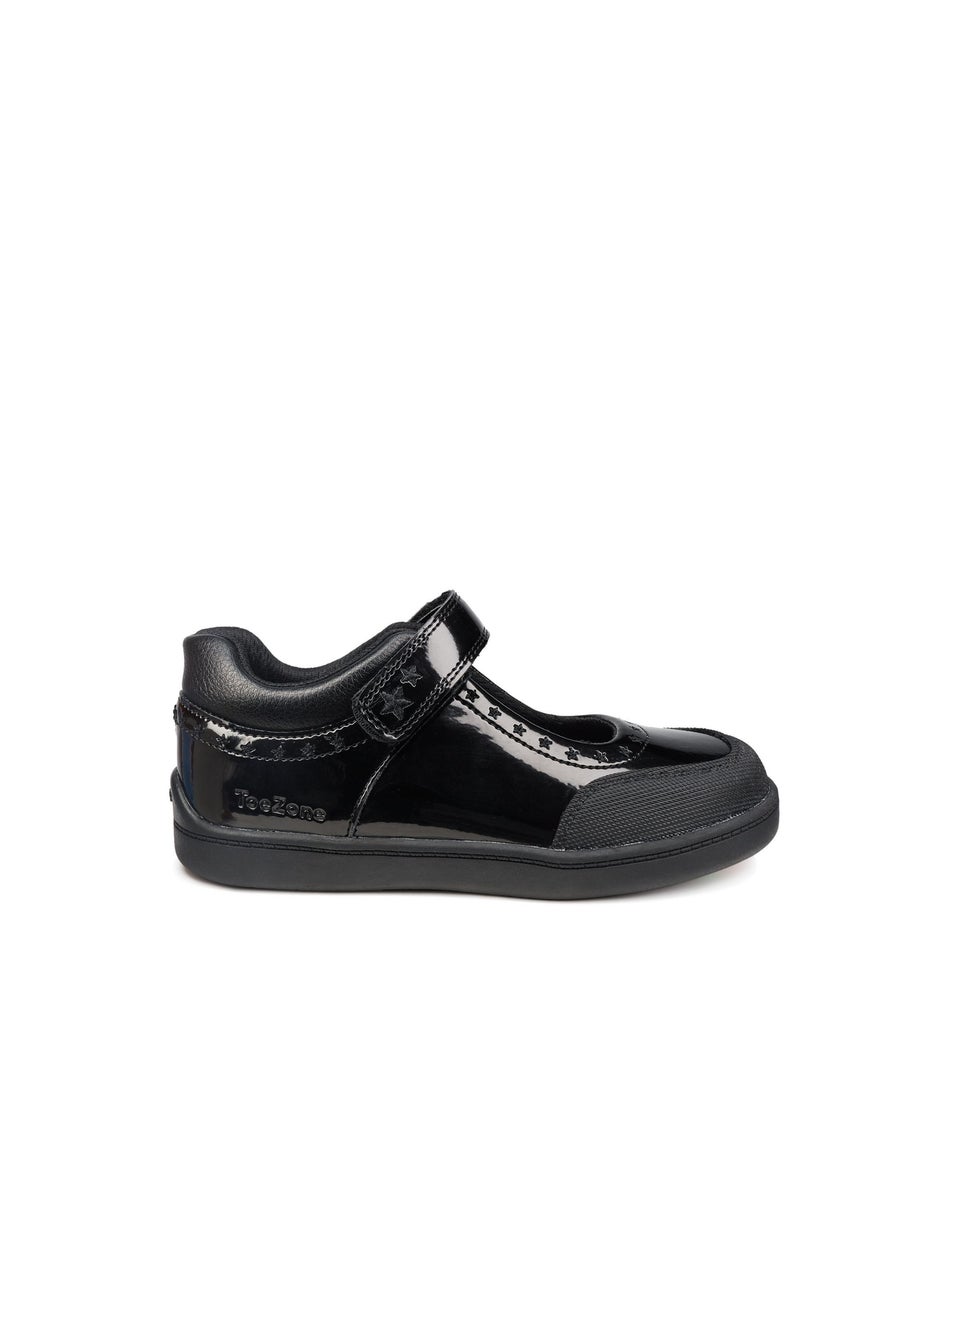 ToeZone Girls Black Sommer Ortholite Insole Technology Shoe (Younger 8- Older 2)